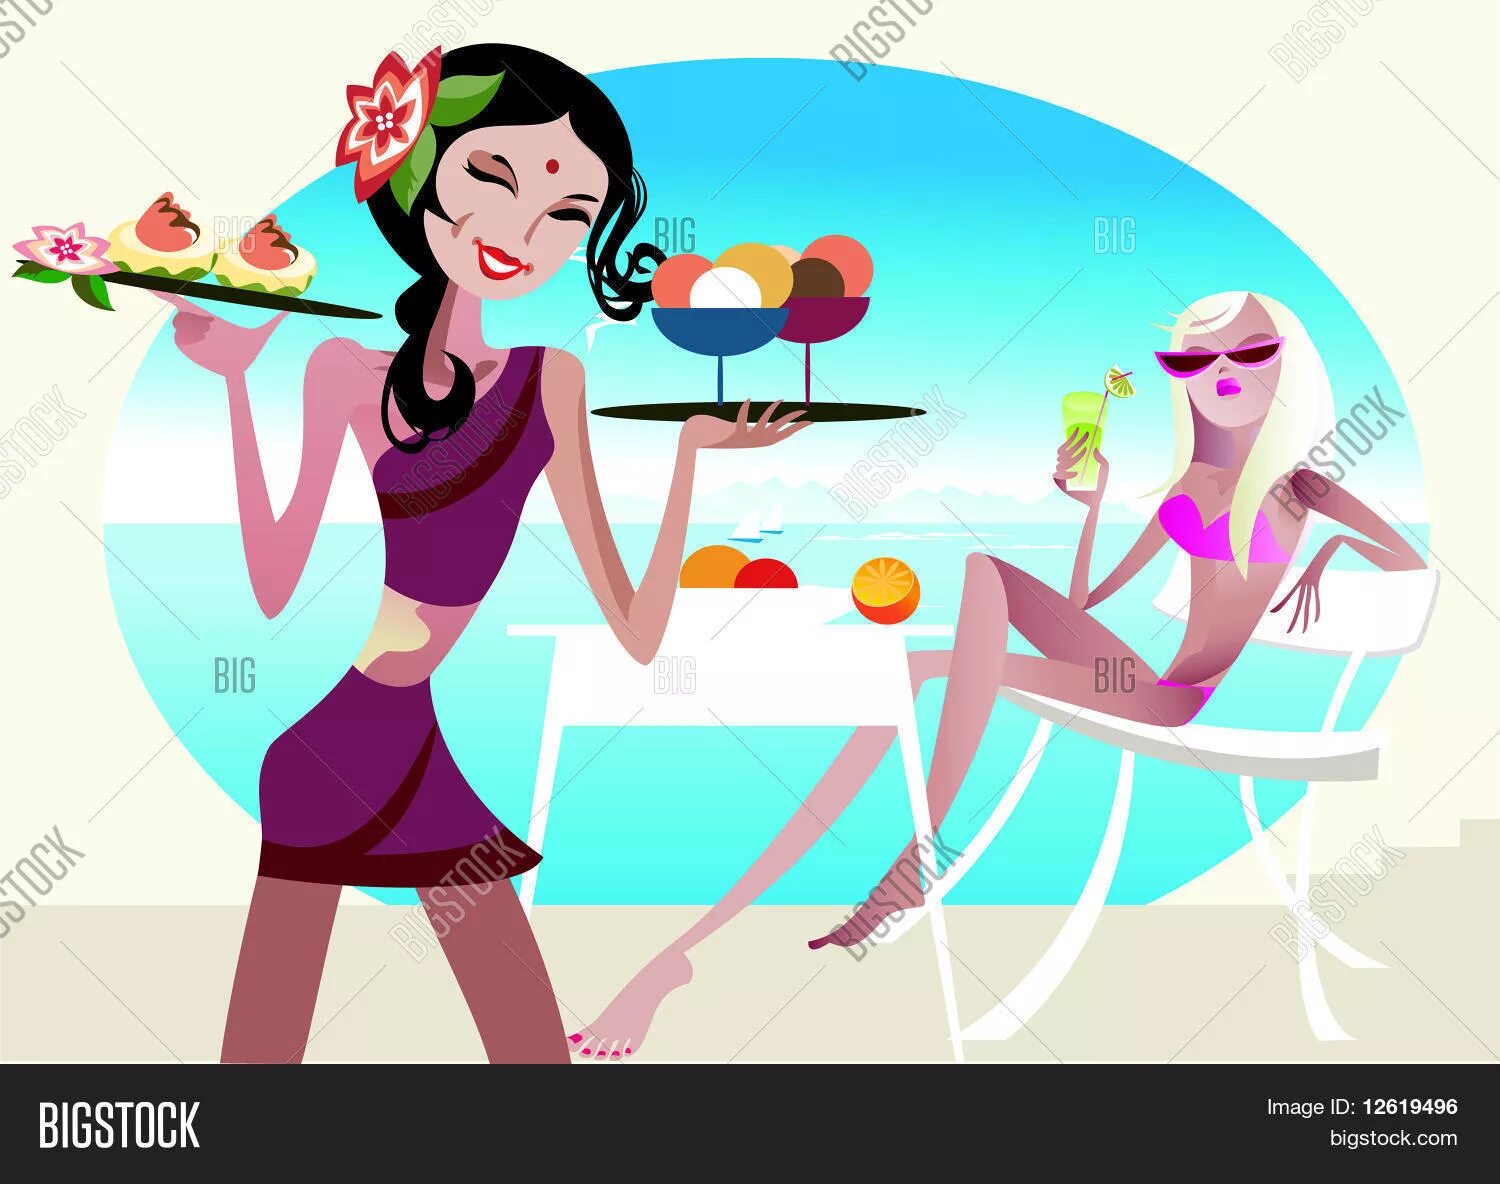 Кафе на пляже рисунок. Пляжное кафе рисунок. Девушки официантки в кафе на пляже. Кафе на пляже векторные рисунки.